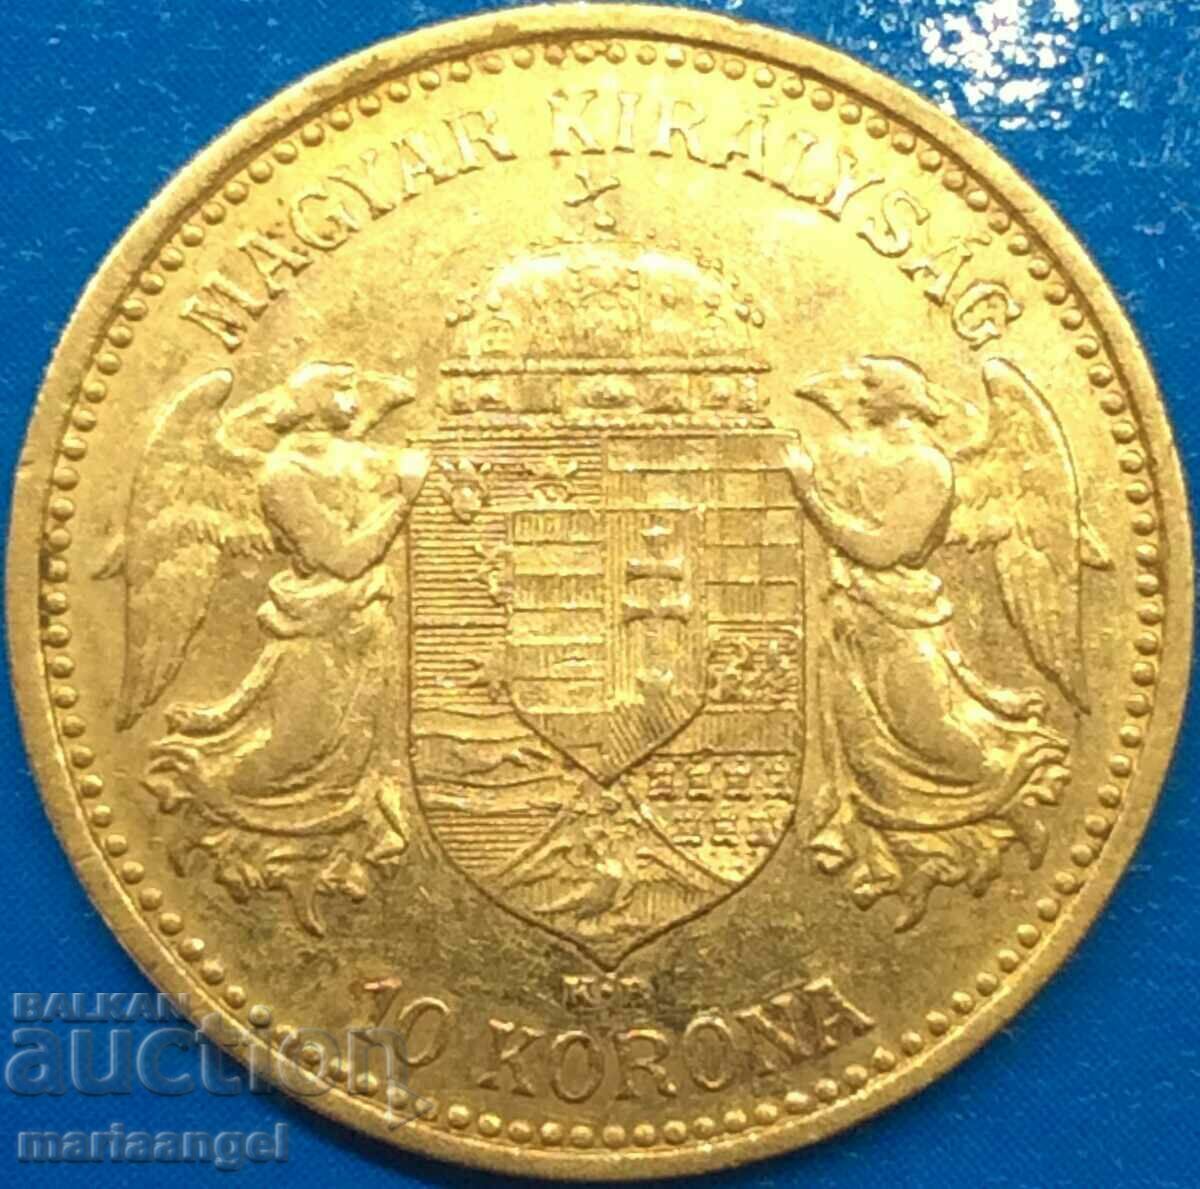 Hungary 10 kroner 1904 Franz Josef gold